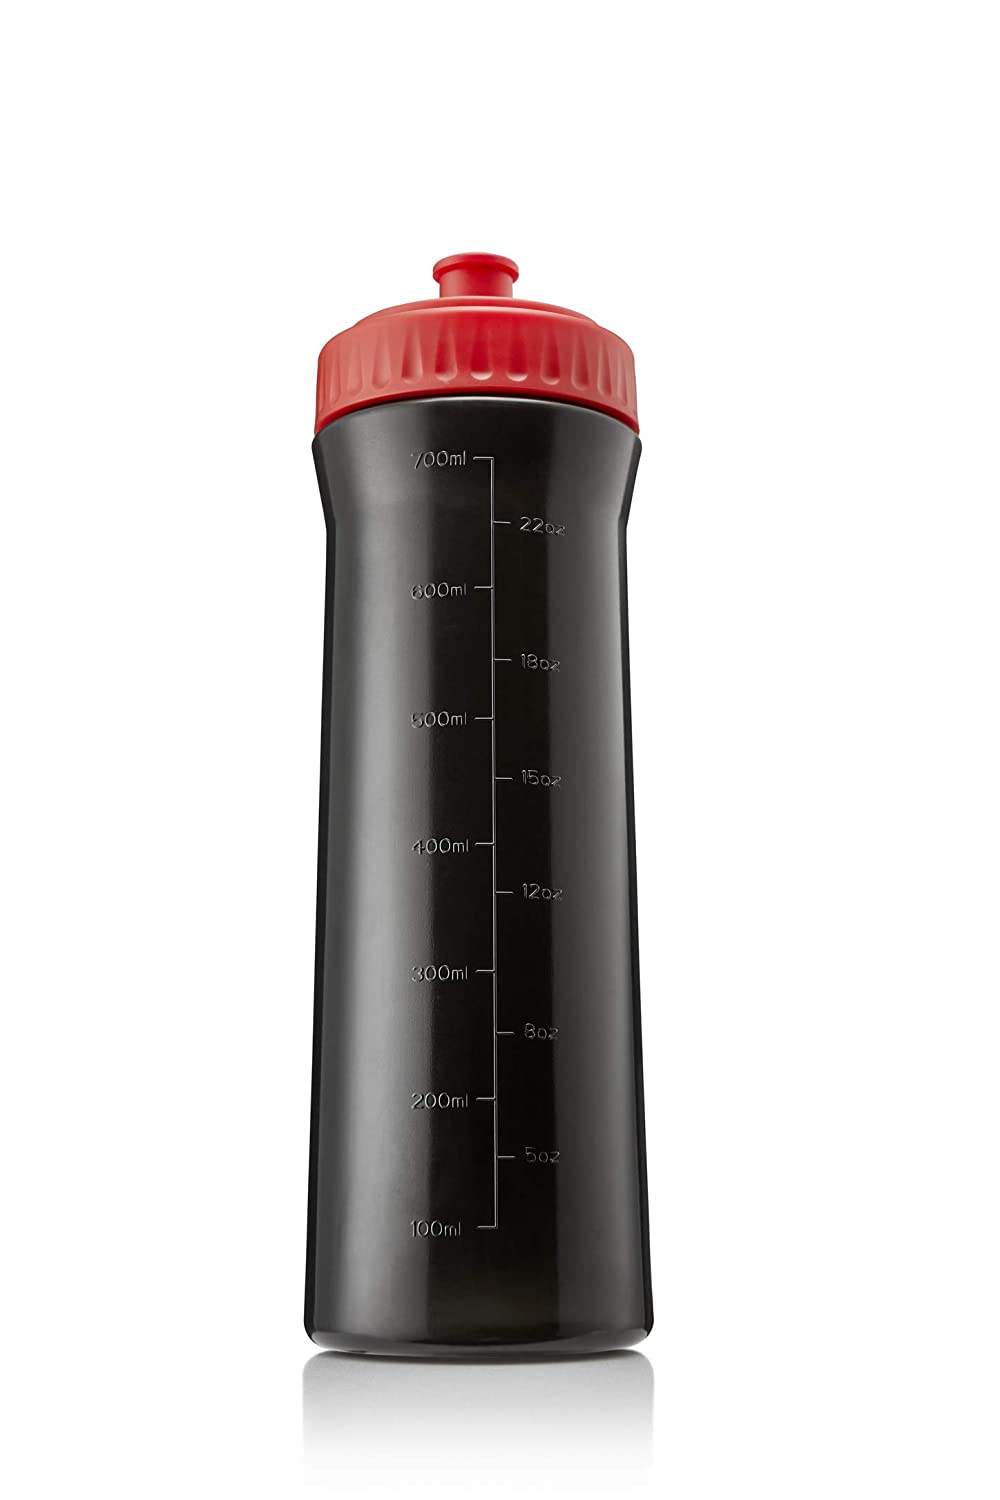 Reebok Water Bottle, Black/Red - 500 ML - Best Price online Prokicksports.com